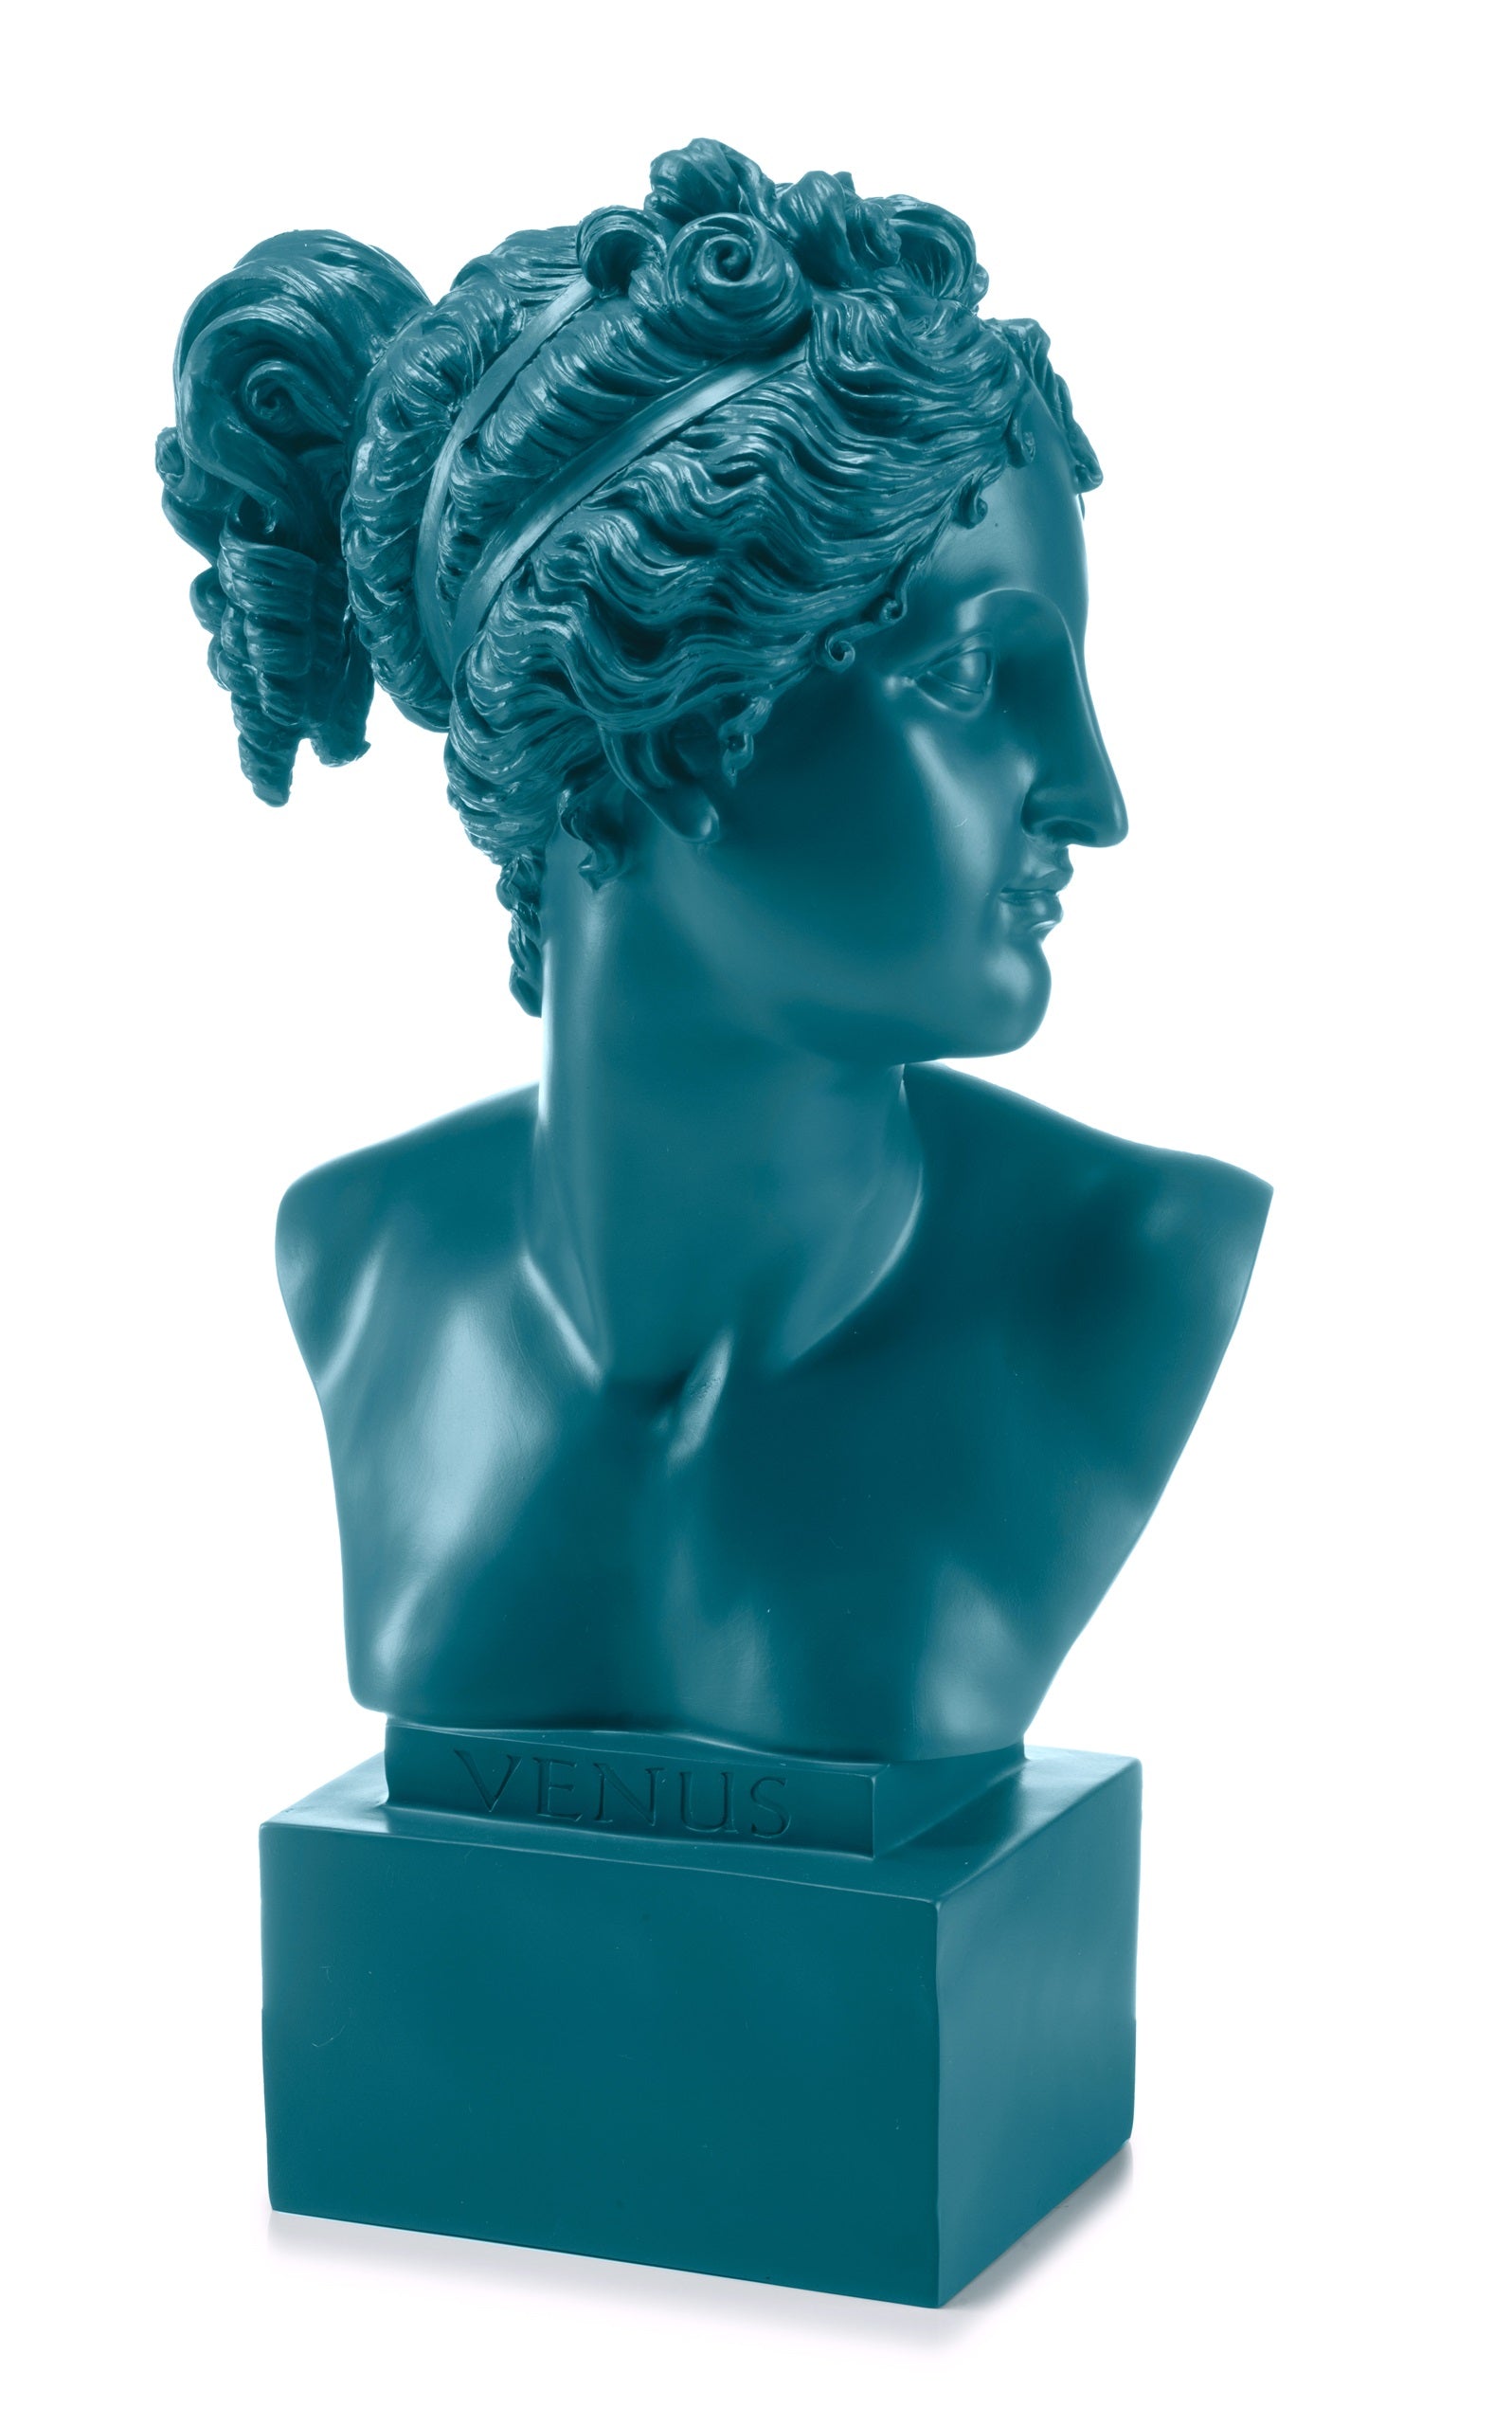 Palais Royal Bellimbusti Busto Venere, 19 cm